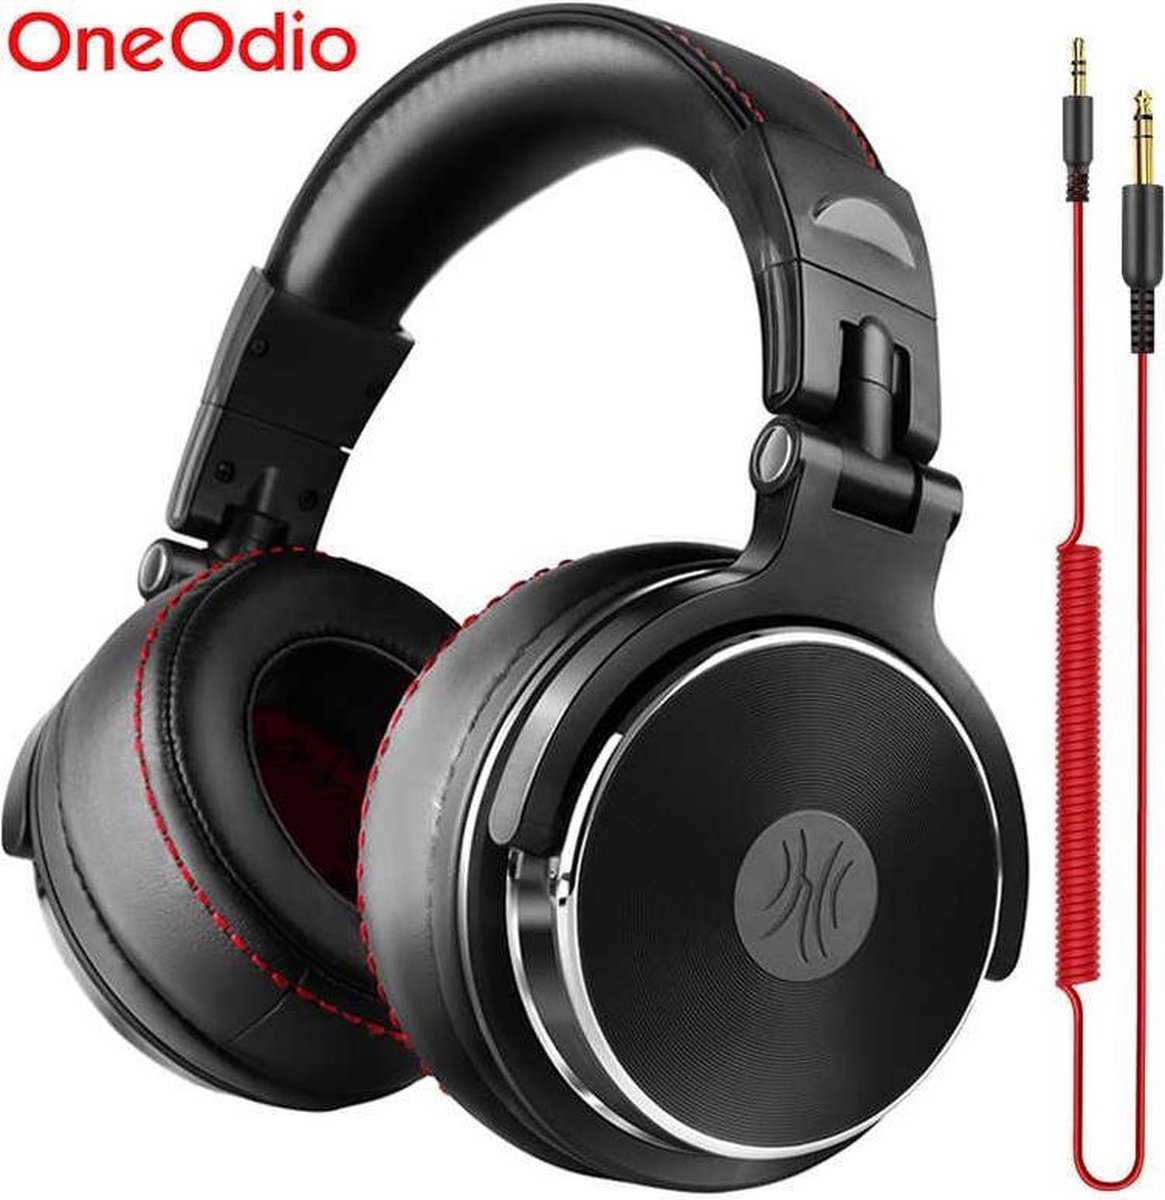 OneOdio Studio Pro 50 -  Dj Pro headphone - Over-ear koptelefoon - hoofdtelefoon - dj set - kop telefoon - professionele koptelefoon - muziek studio - dj set mengpaneel - dj Headphones - OneOdio